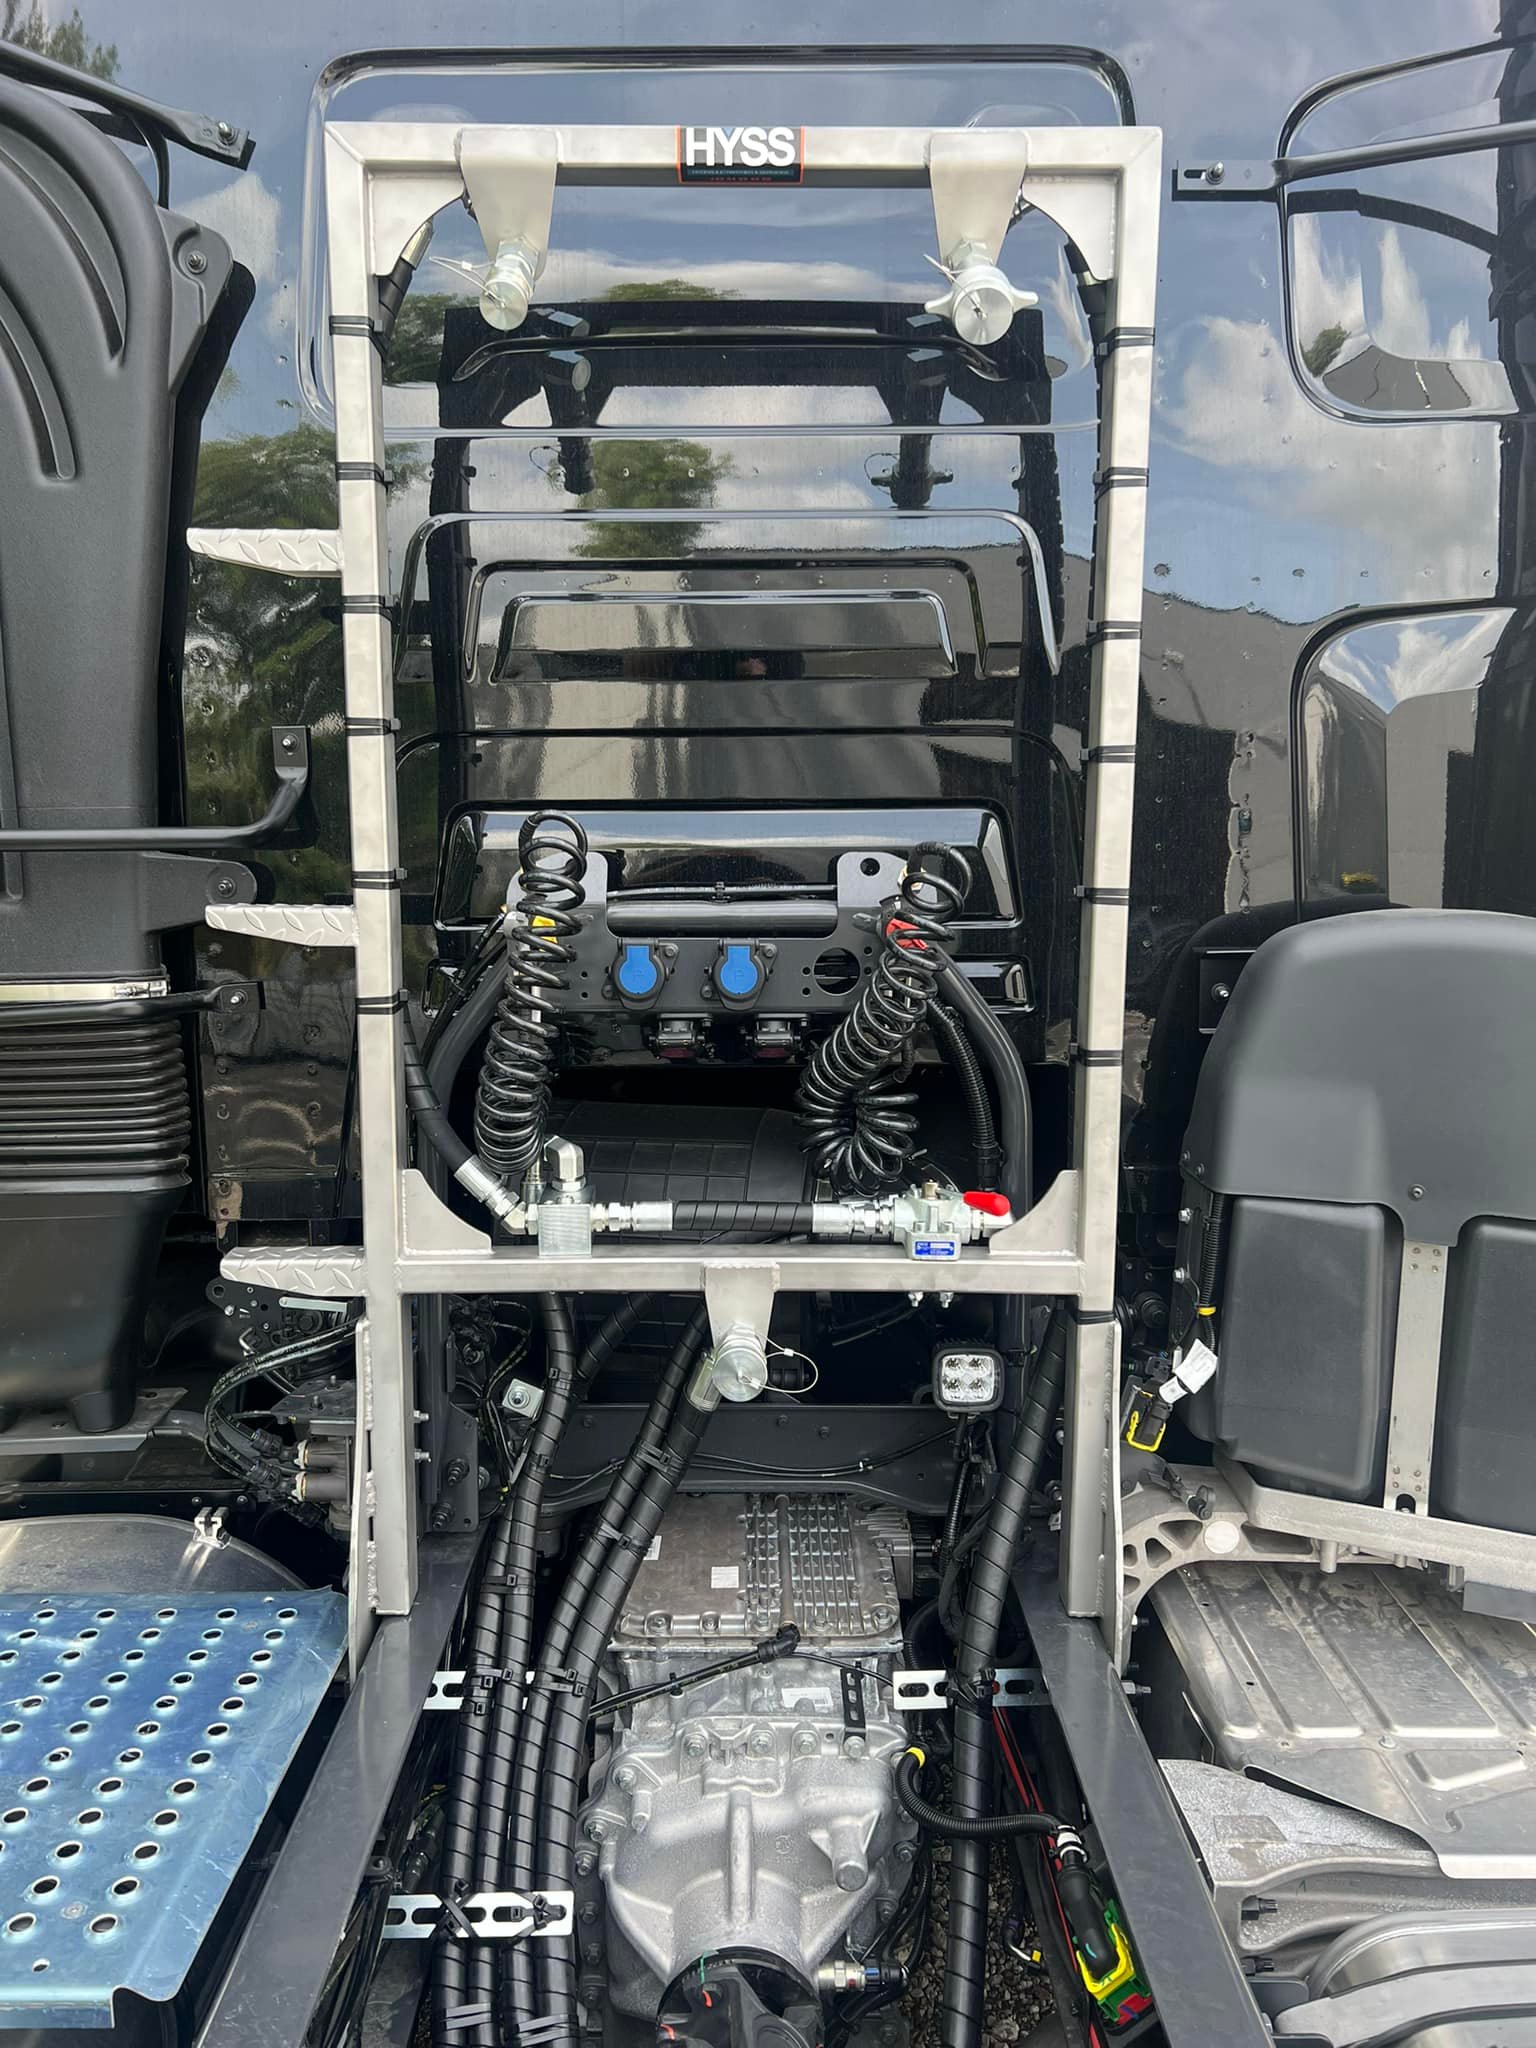 Een hydraulische systeem inclusief RVS fraim achter de cabine